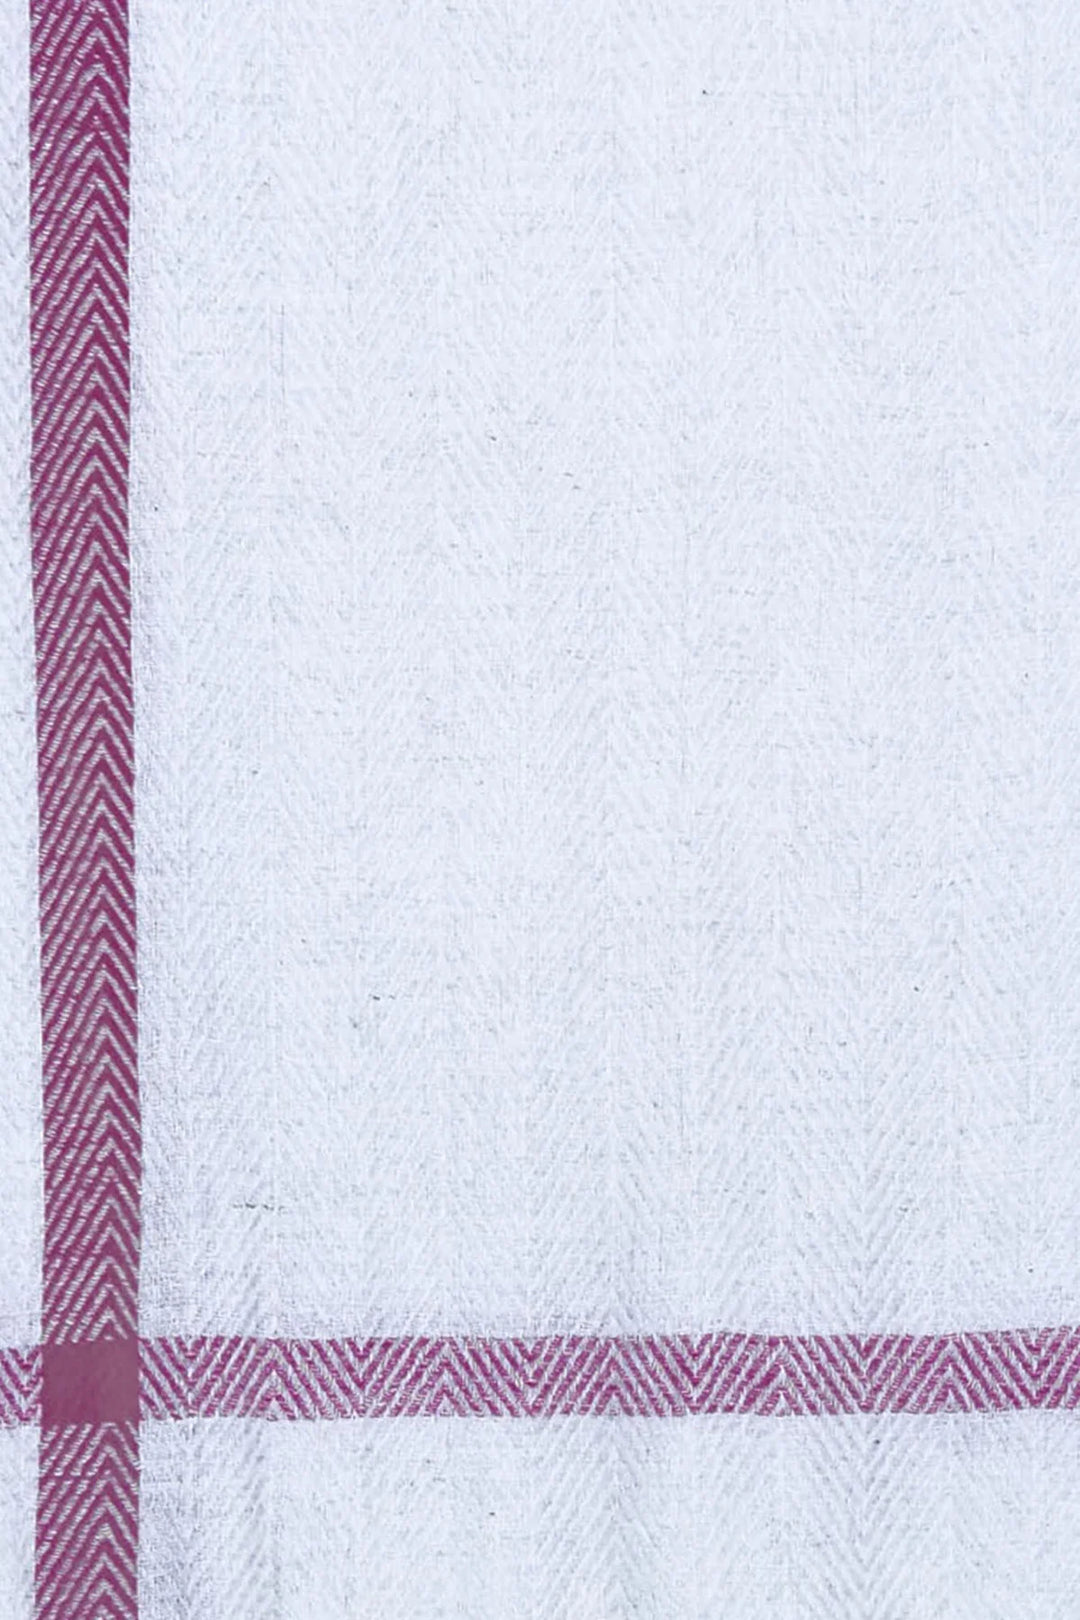 White Cashmere Stole: Liberty, 75cm x 210cm | Saorsa Handwoven Soft Cashmere Stole - White